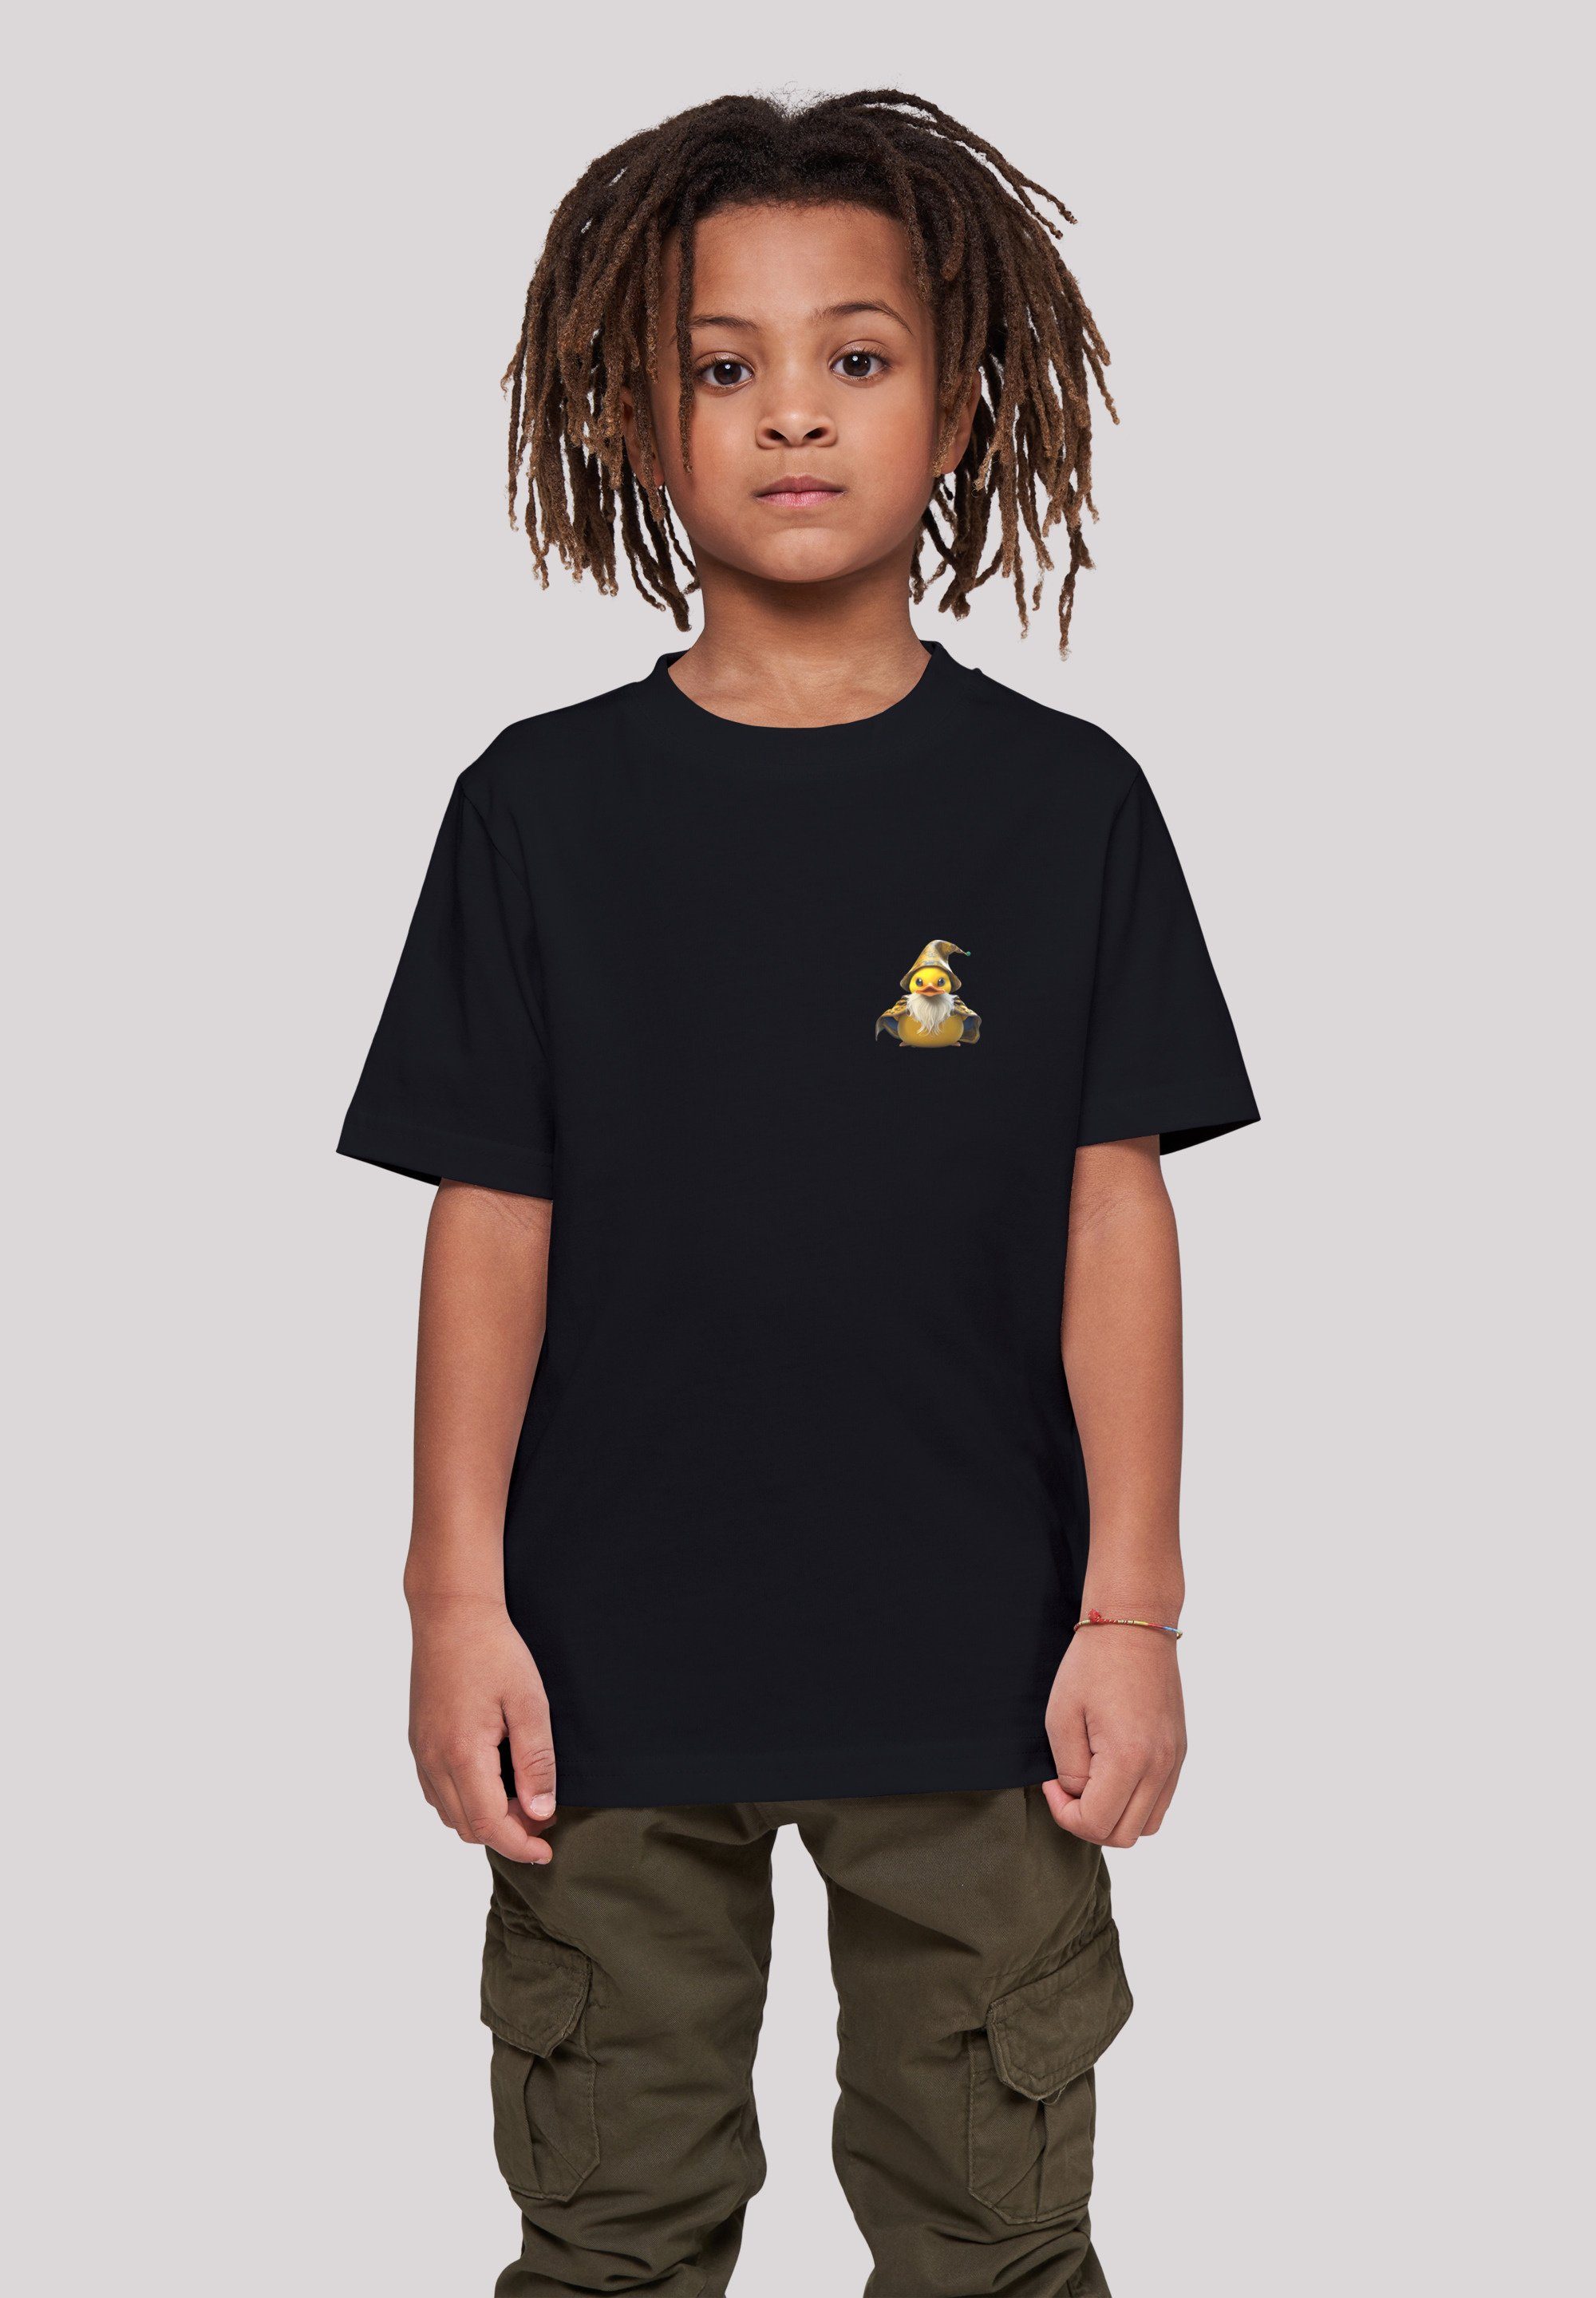 F4NT4STIC T-Shirt Rubber Duck Wizard TEE UNISEX Print schwarz